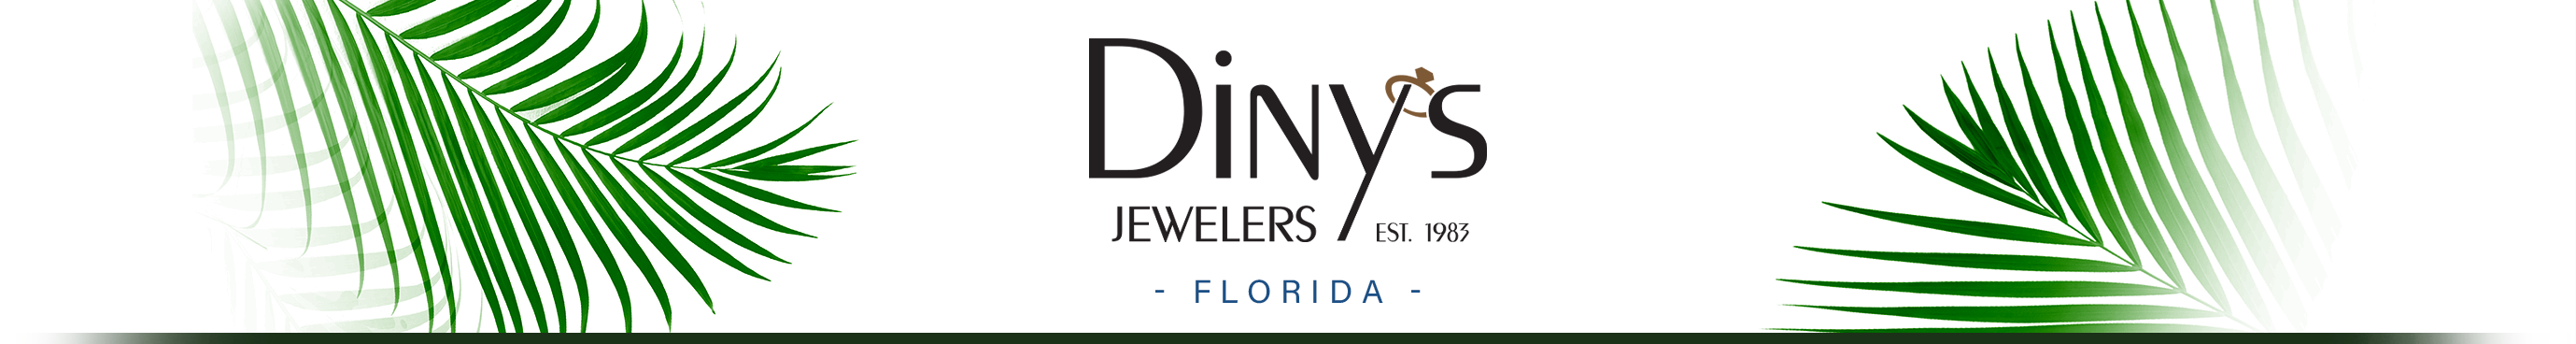 Diny's Jewelers of Florida Logo